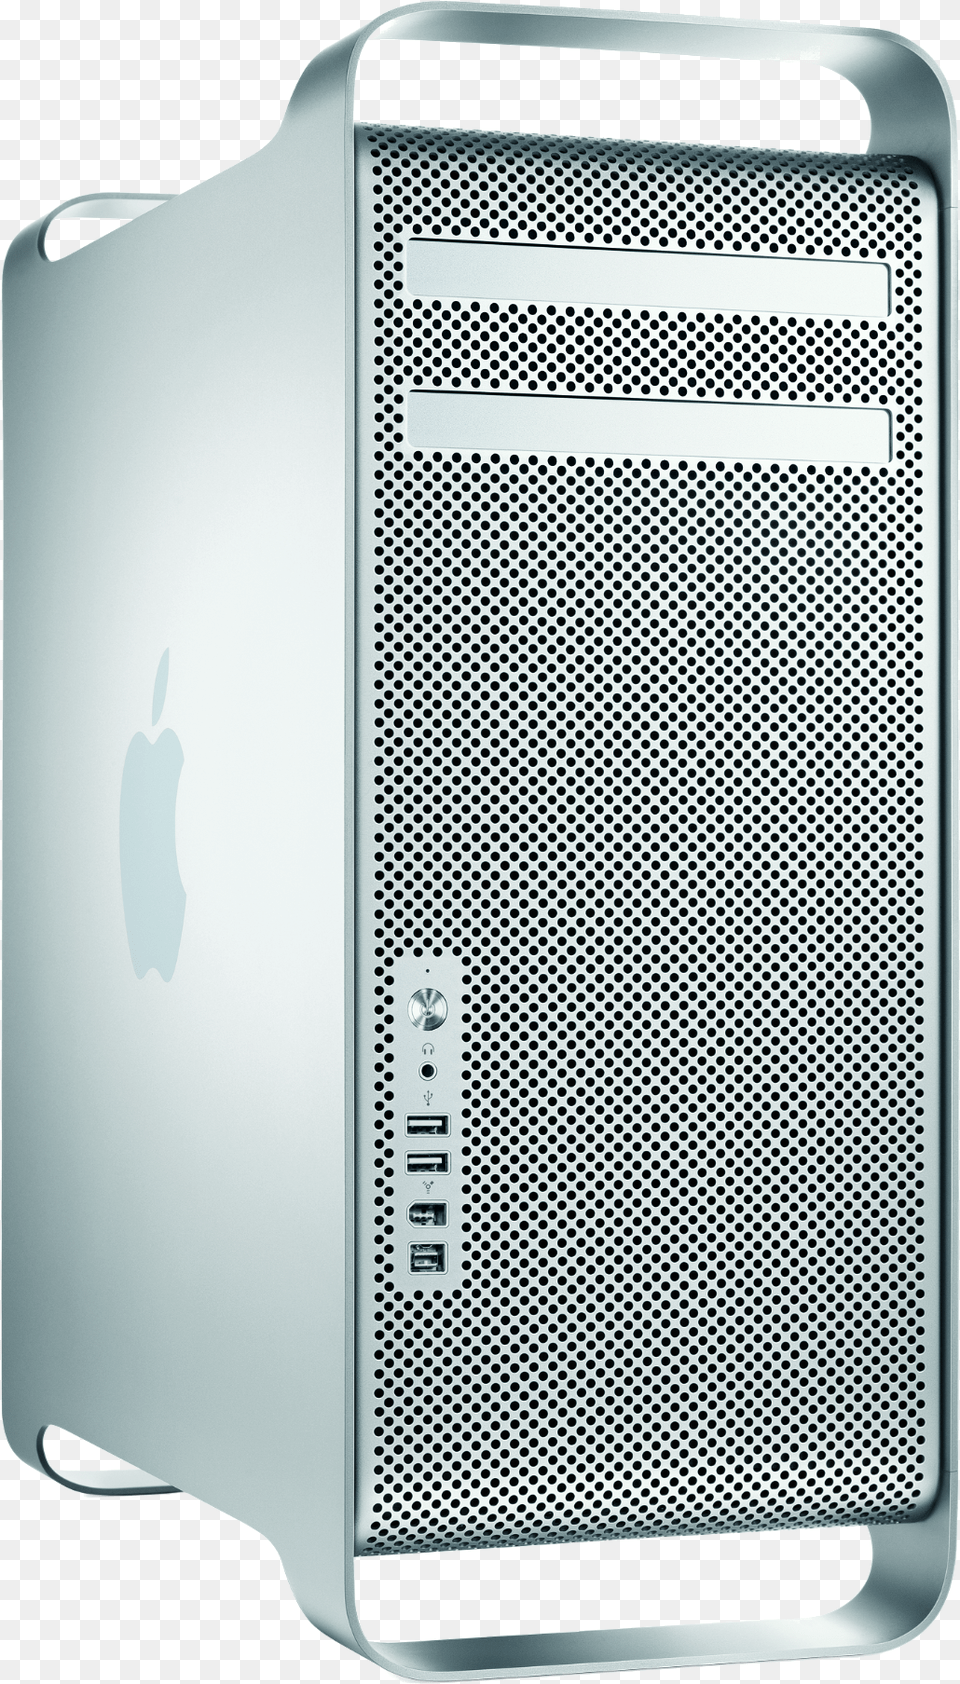 Apple Mac Pro Server Mac Pro 2006 Case, Electronics, Computer, Hardware, Speaker Free Png Download